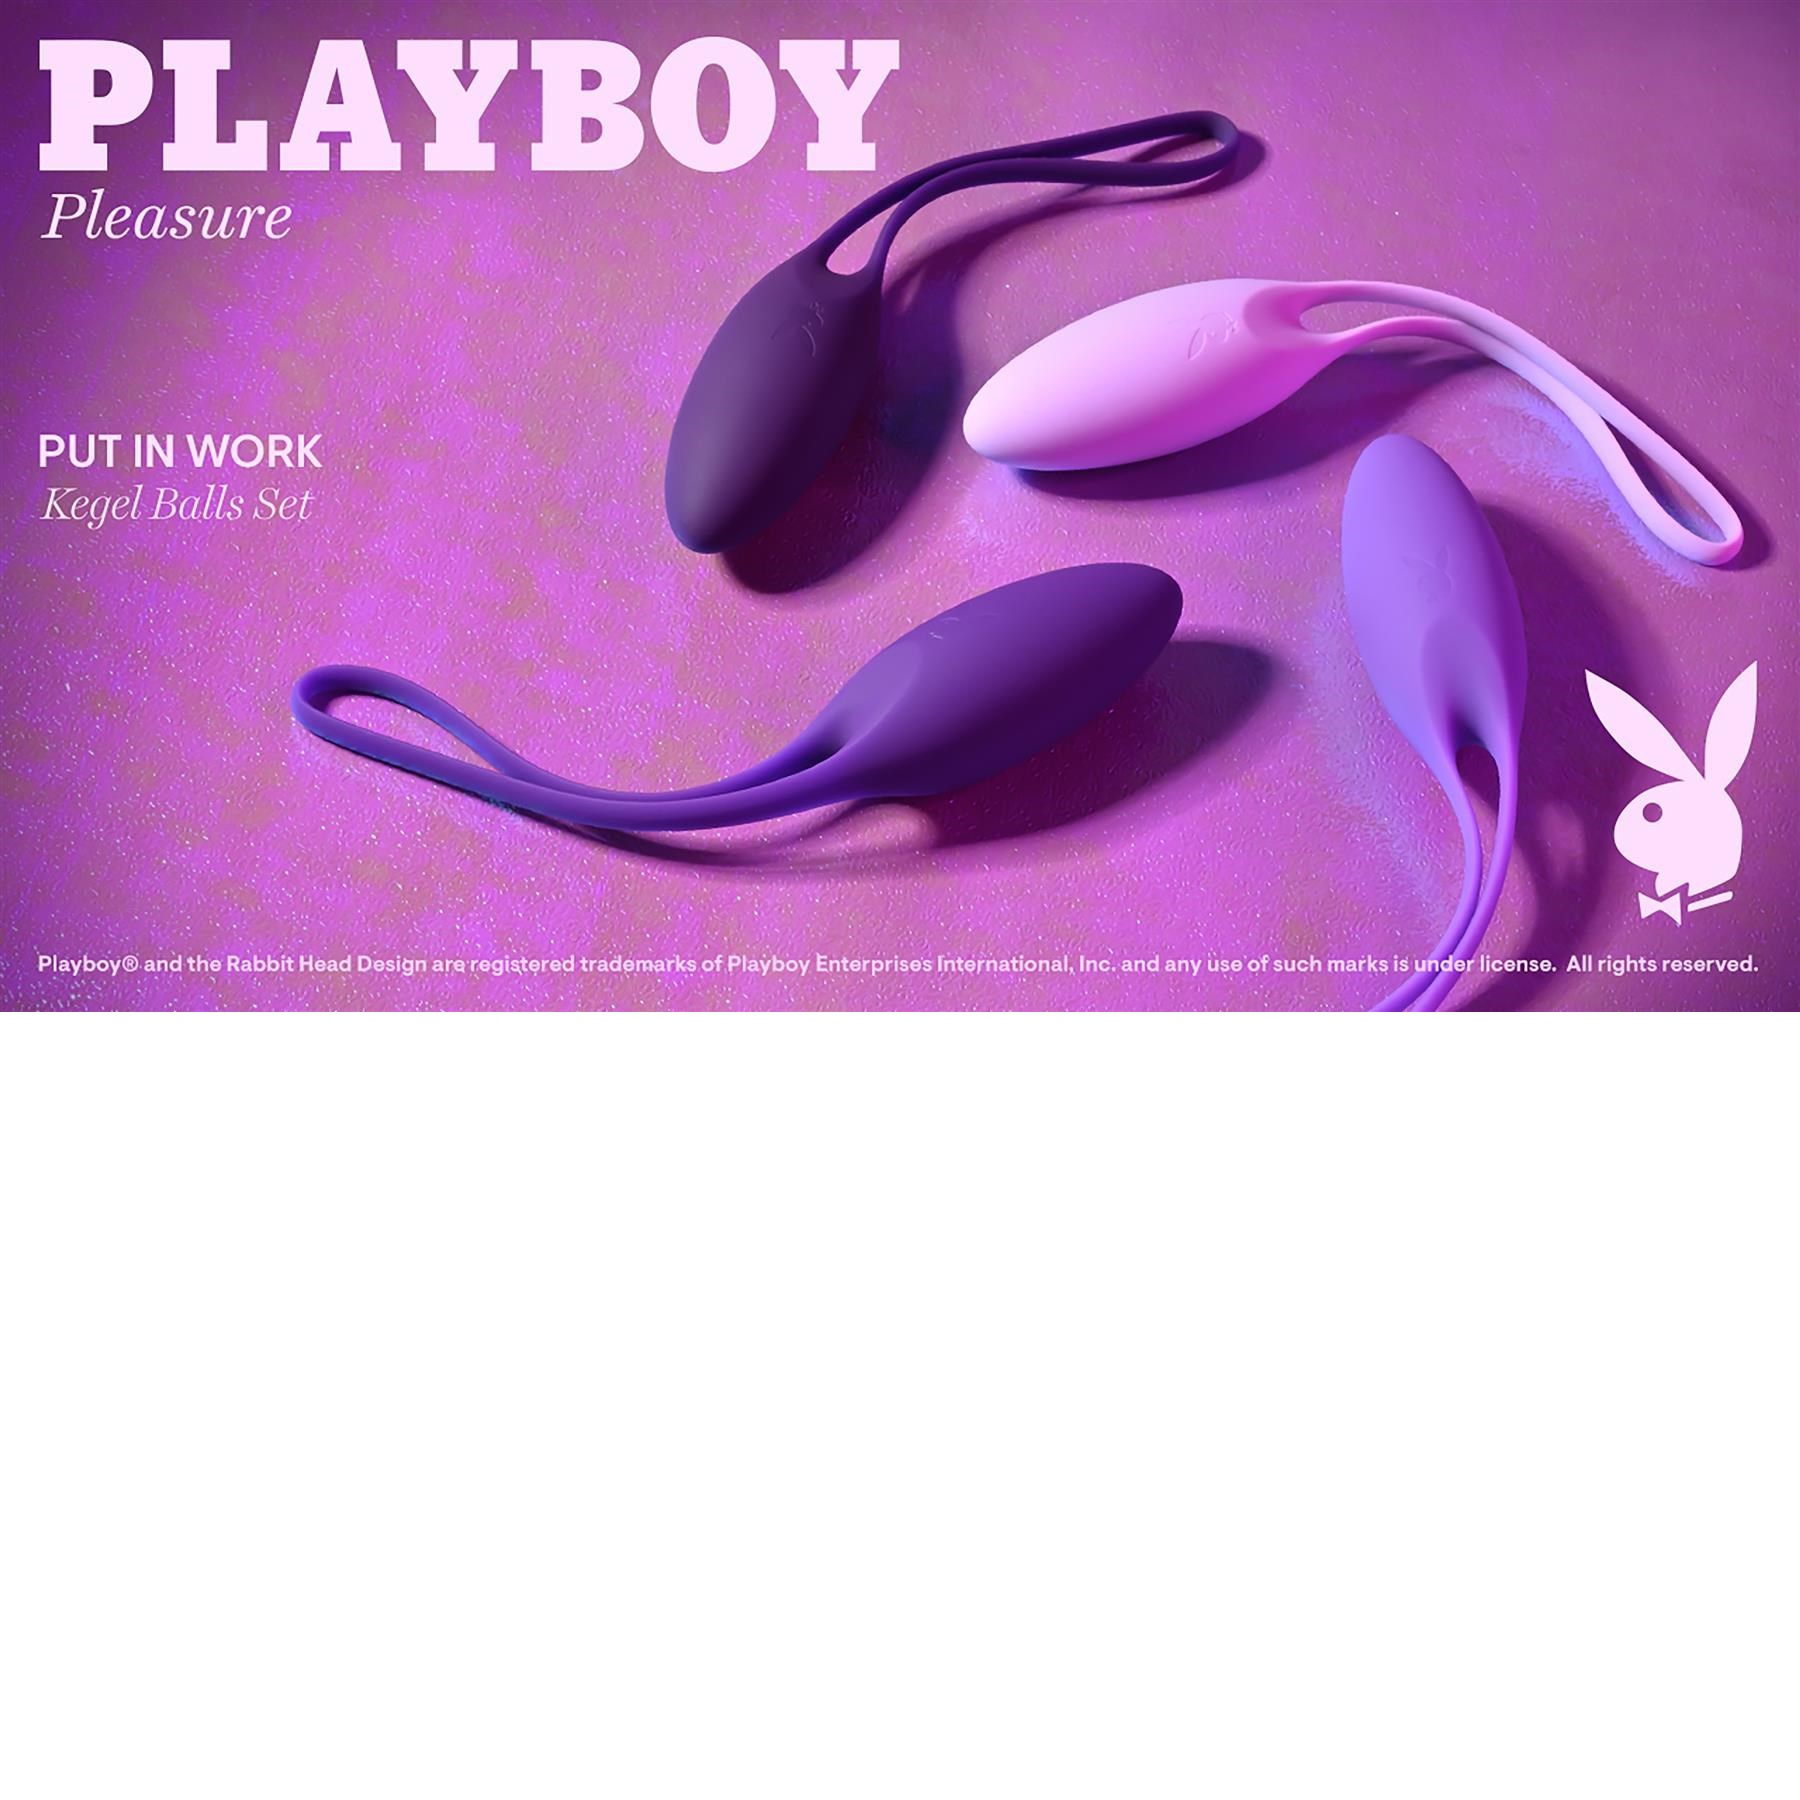 Playboy Pleasure Put In Work Kegel Training Set - Lifestyle Image